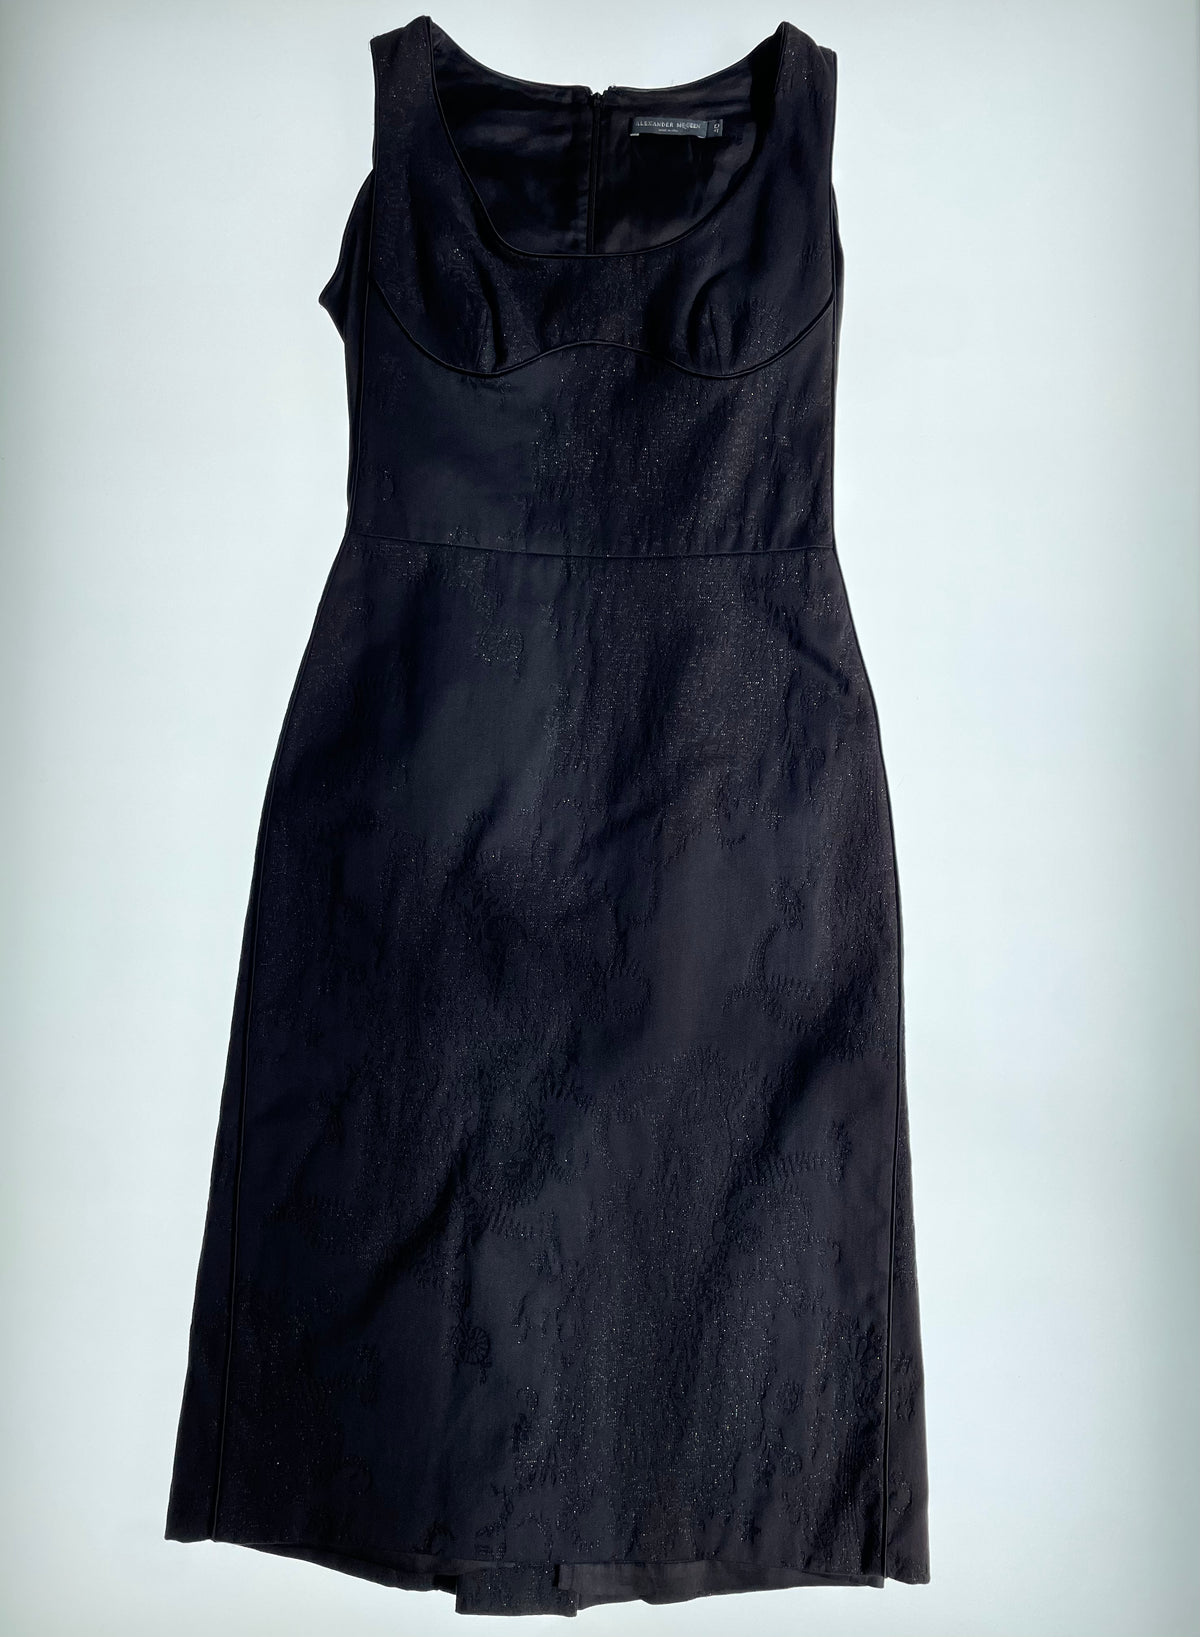 FW04 Black Embossed Dress